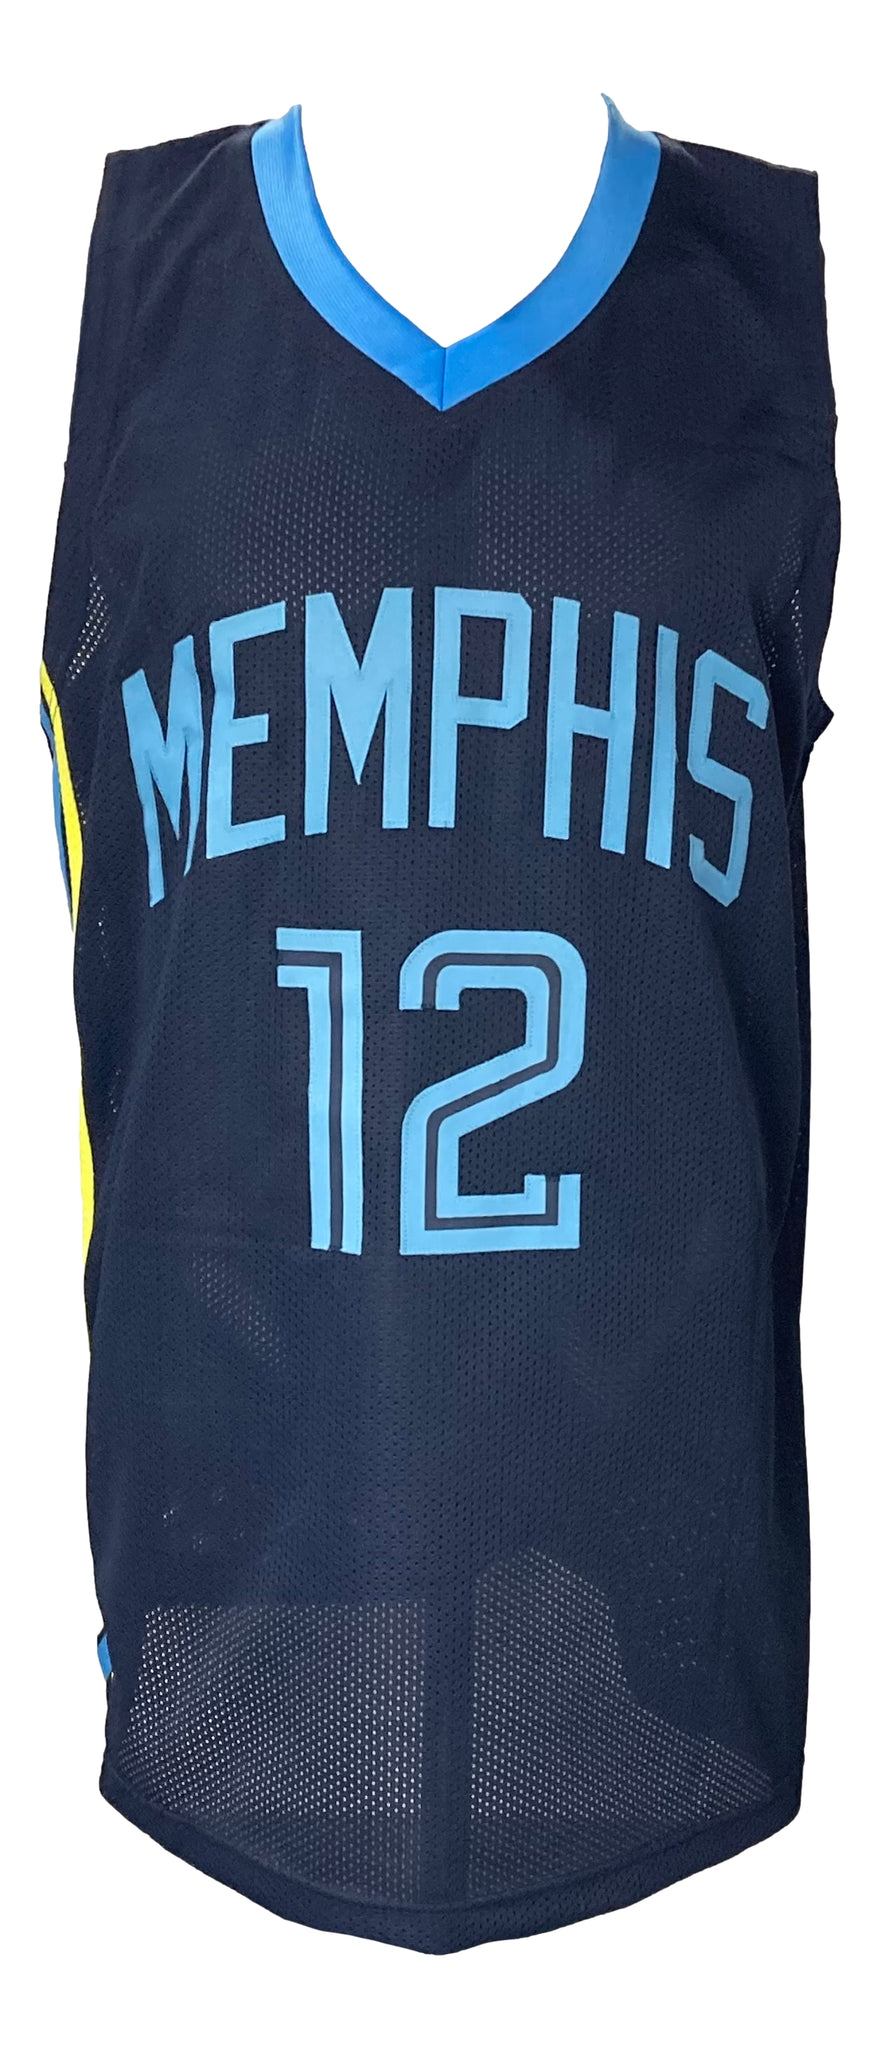 Ja Morant Autographed Memphis Custom Basketball Jersey - BAS at